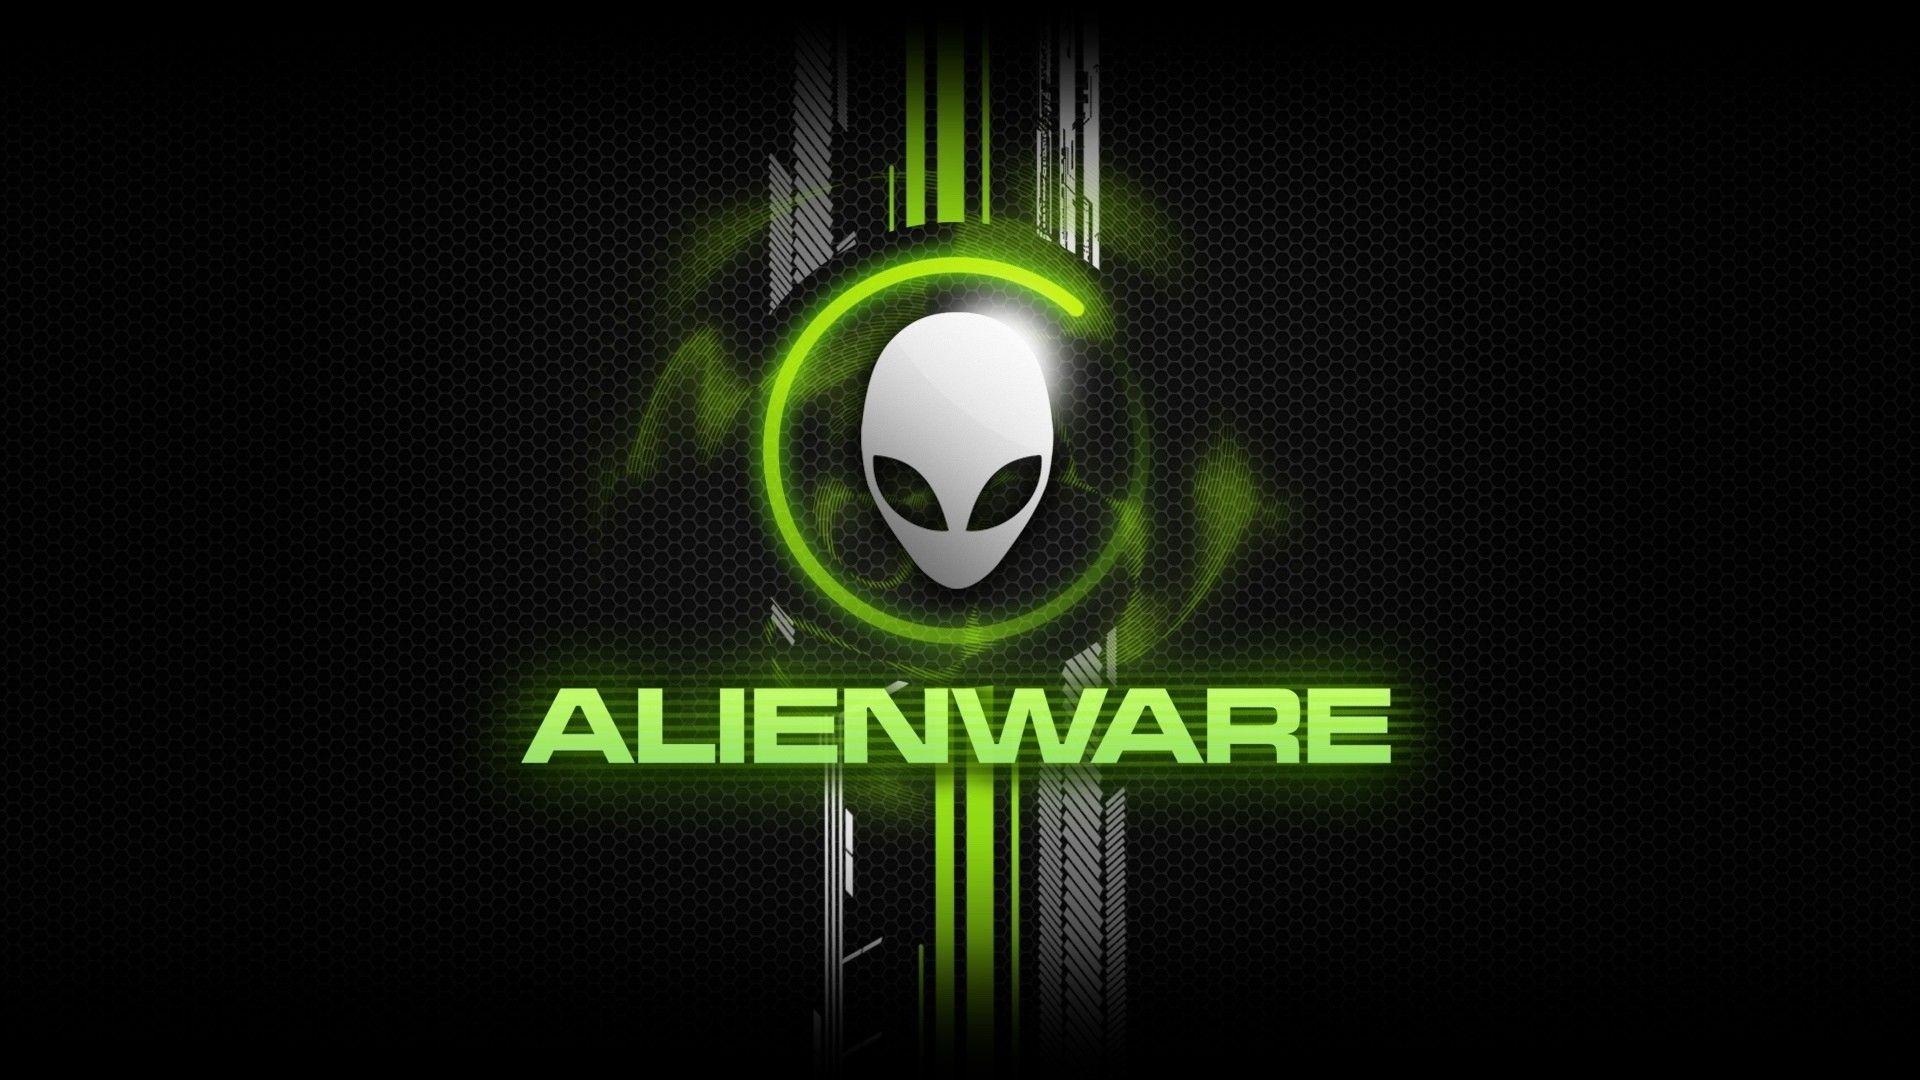 Alienware Wallpaper 36901 High Resolution. download all free jpeg